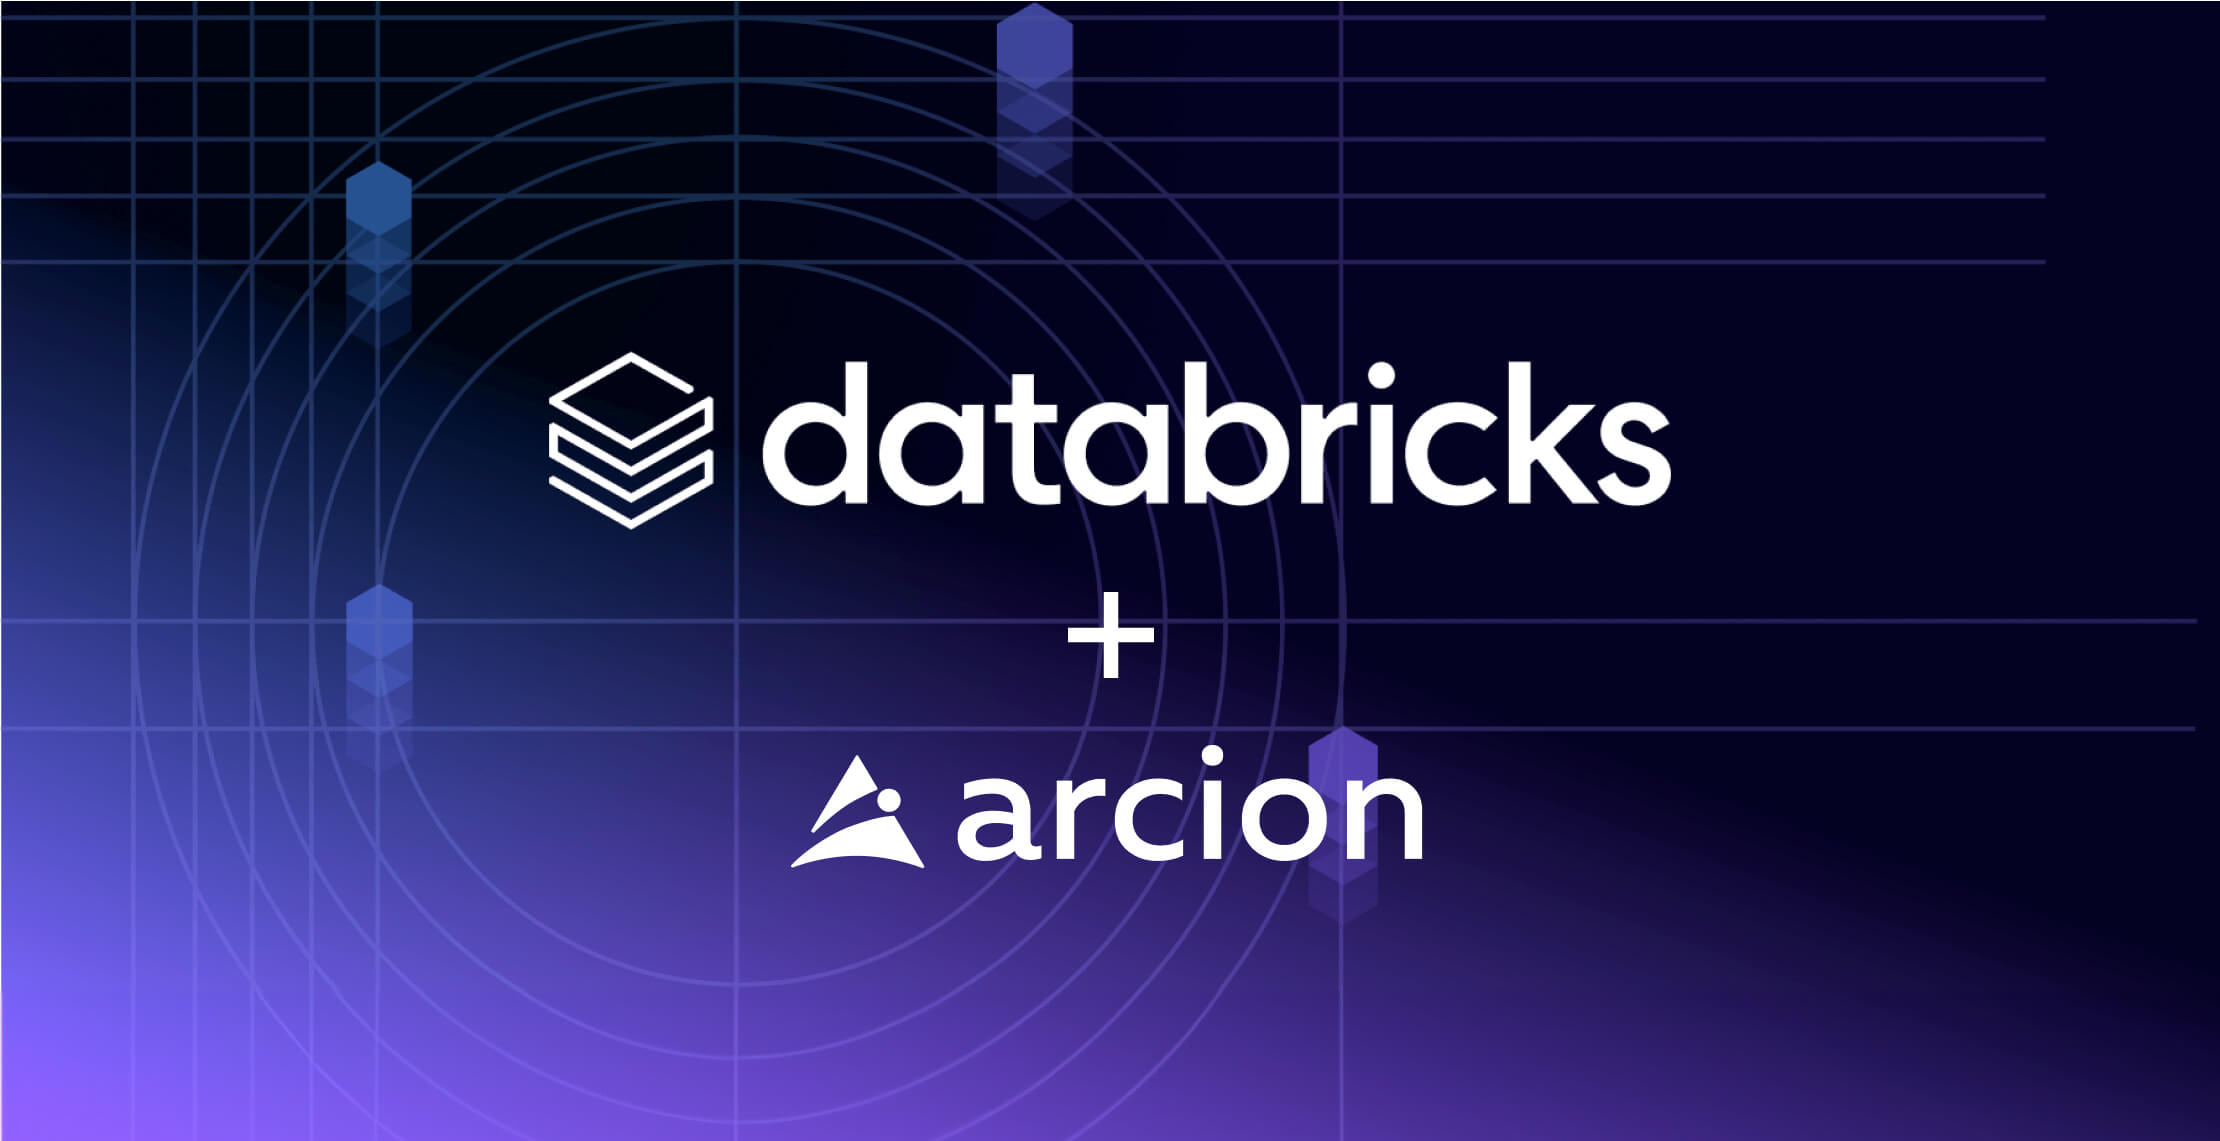 Databricks Makes $100M Acquisition Of Data Replication Startup Arcion